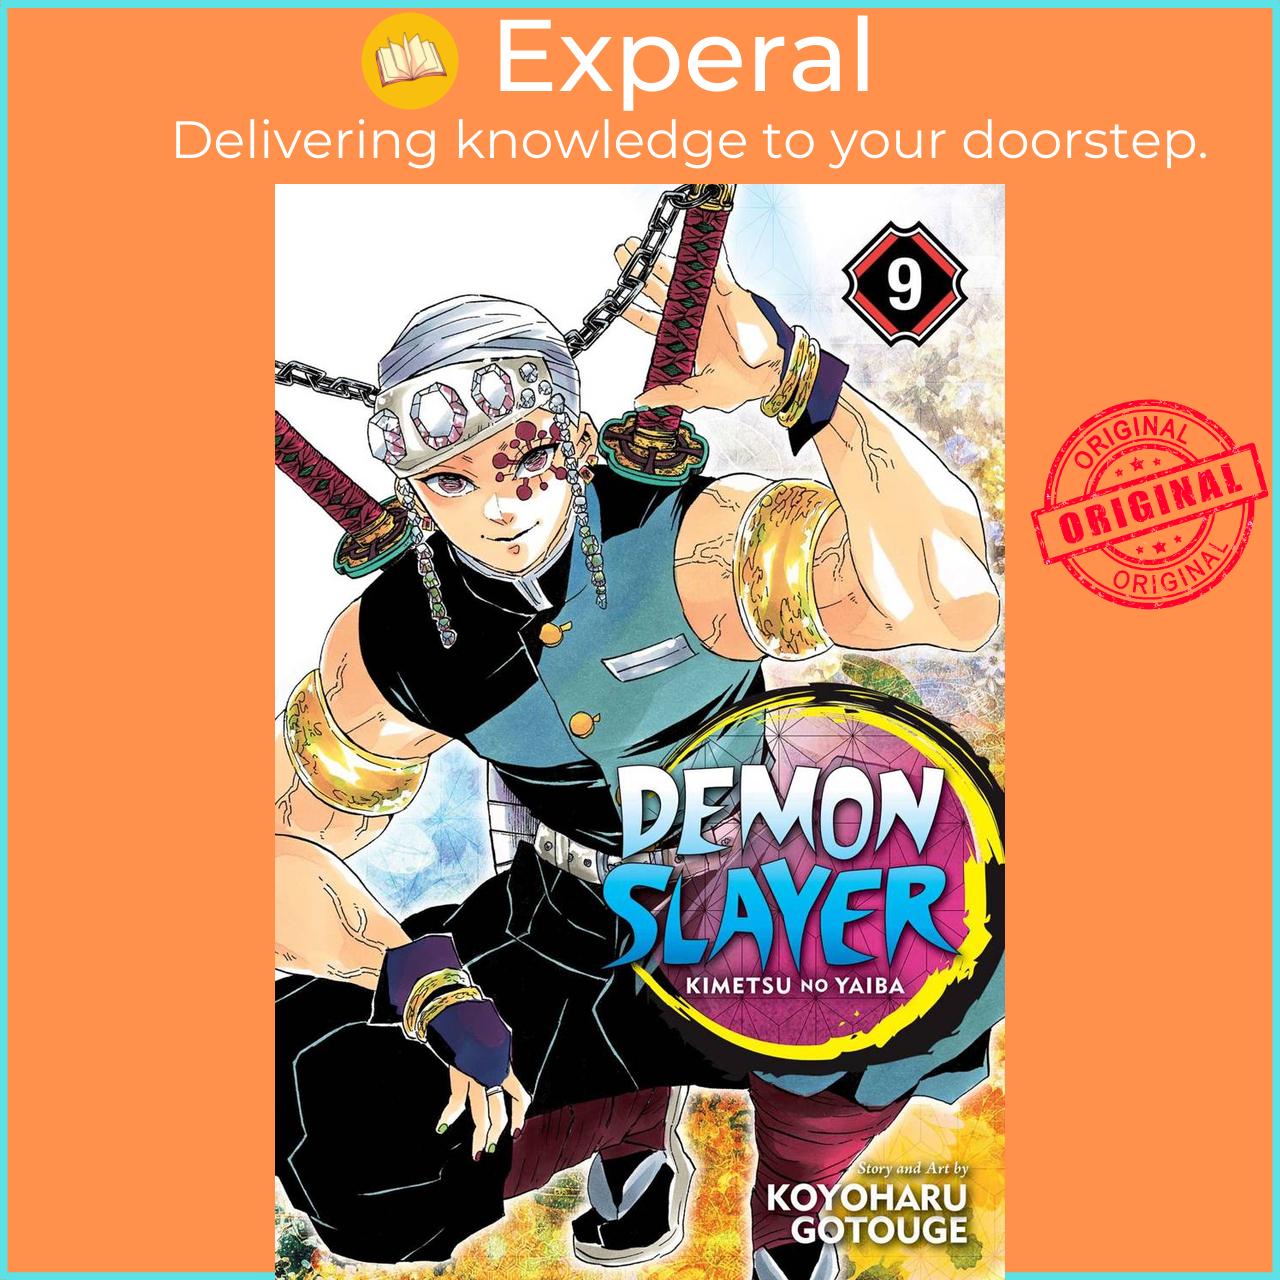 Sách - Demon Slayer: Kimetsu no Yaiba, Vol. 9 by Koyoharu Gotouge (UK edition, paperback)